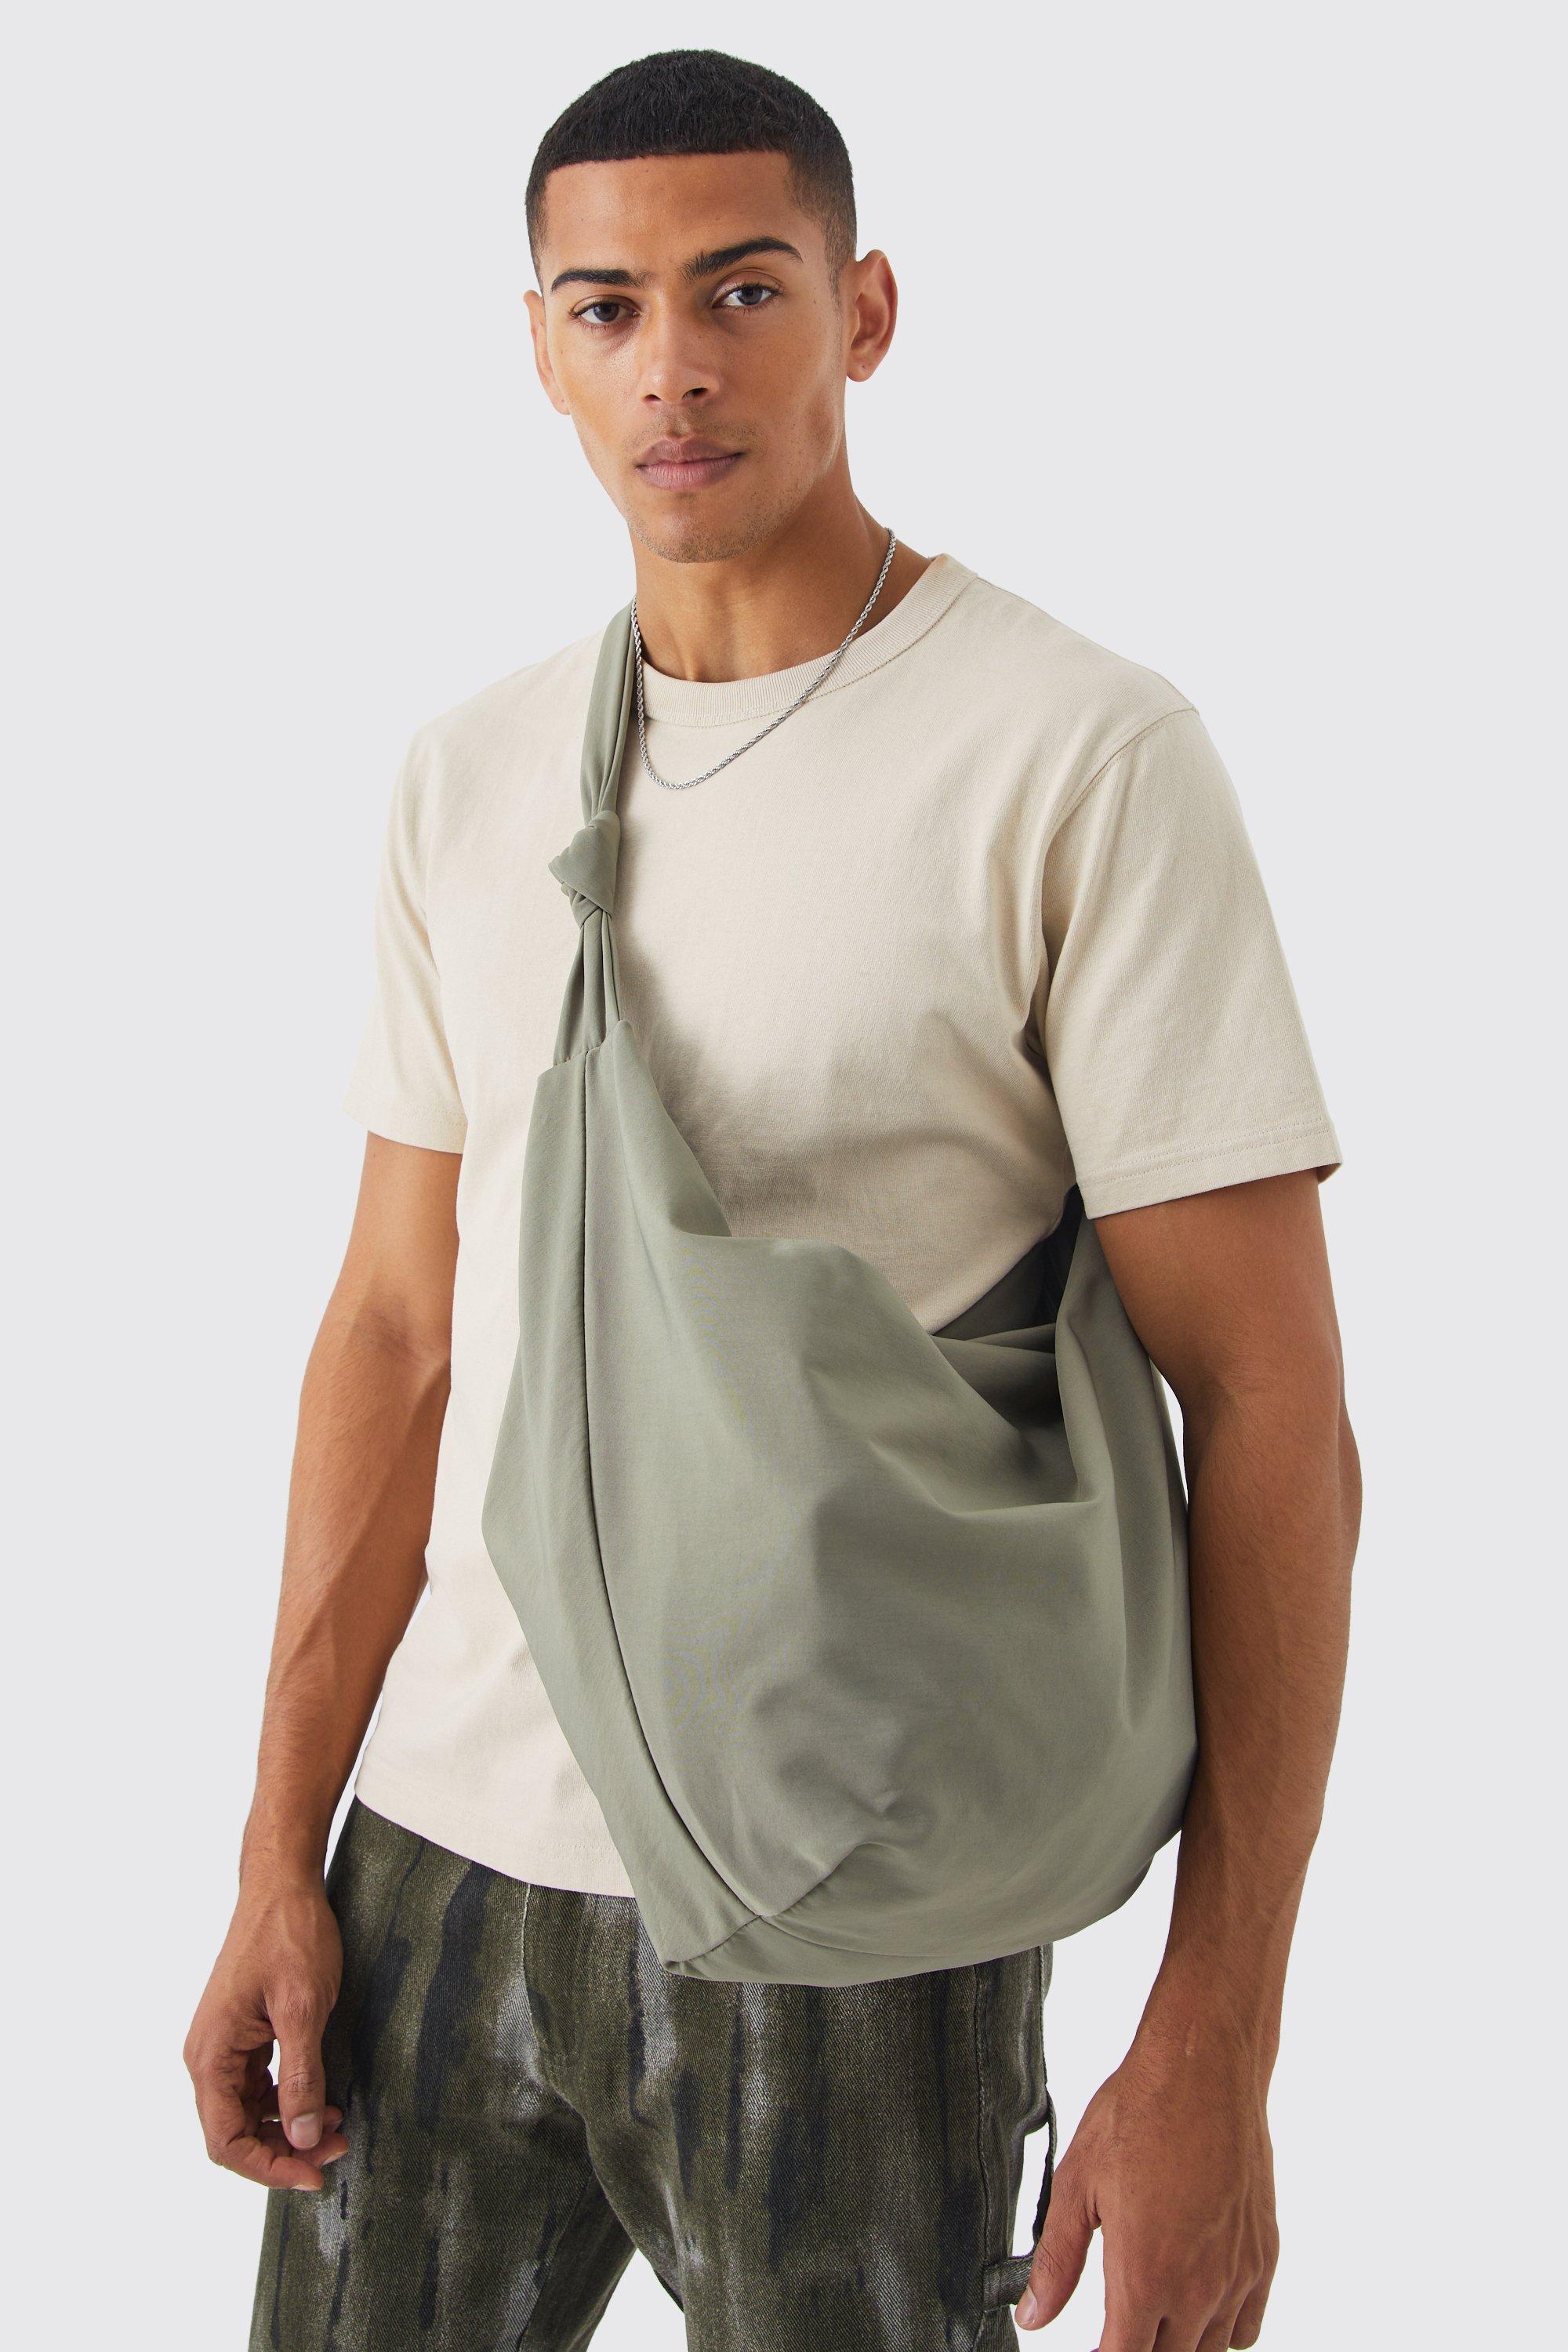 men's sling bag - green - one size, green